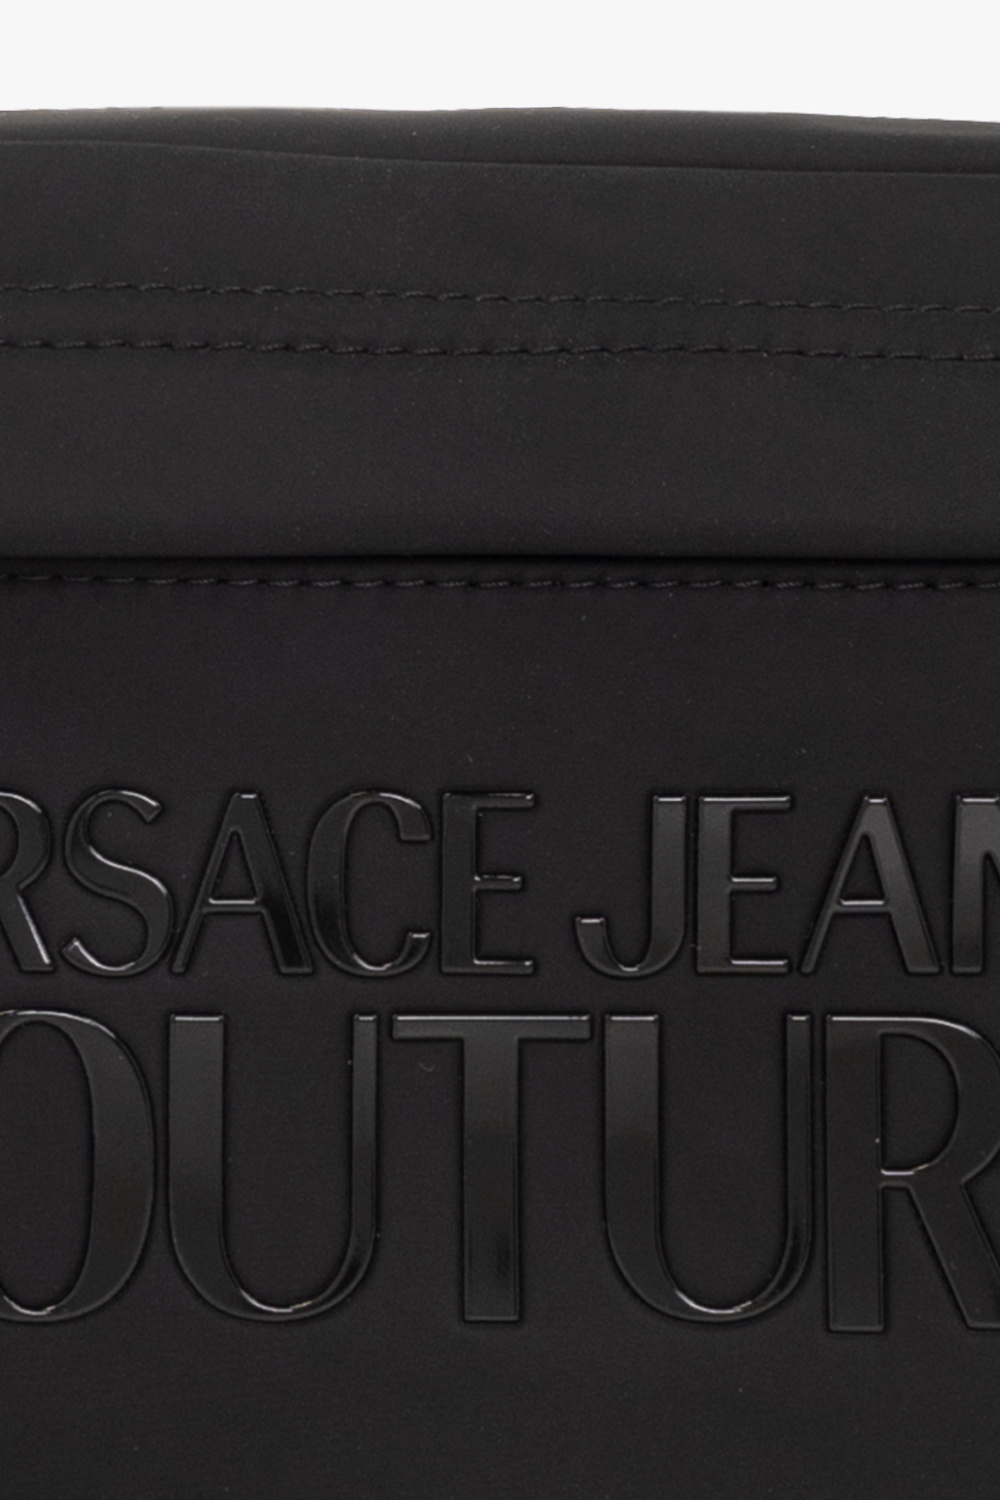 Versace Jeans Couture Zilver Savanna cargo shorts